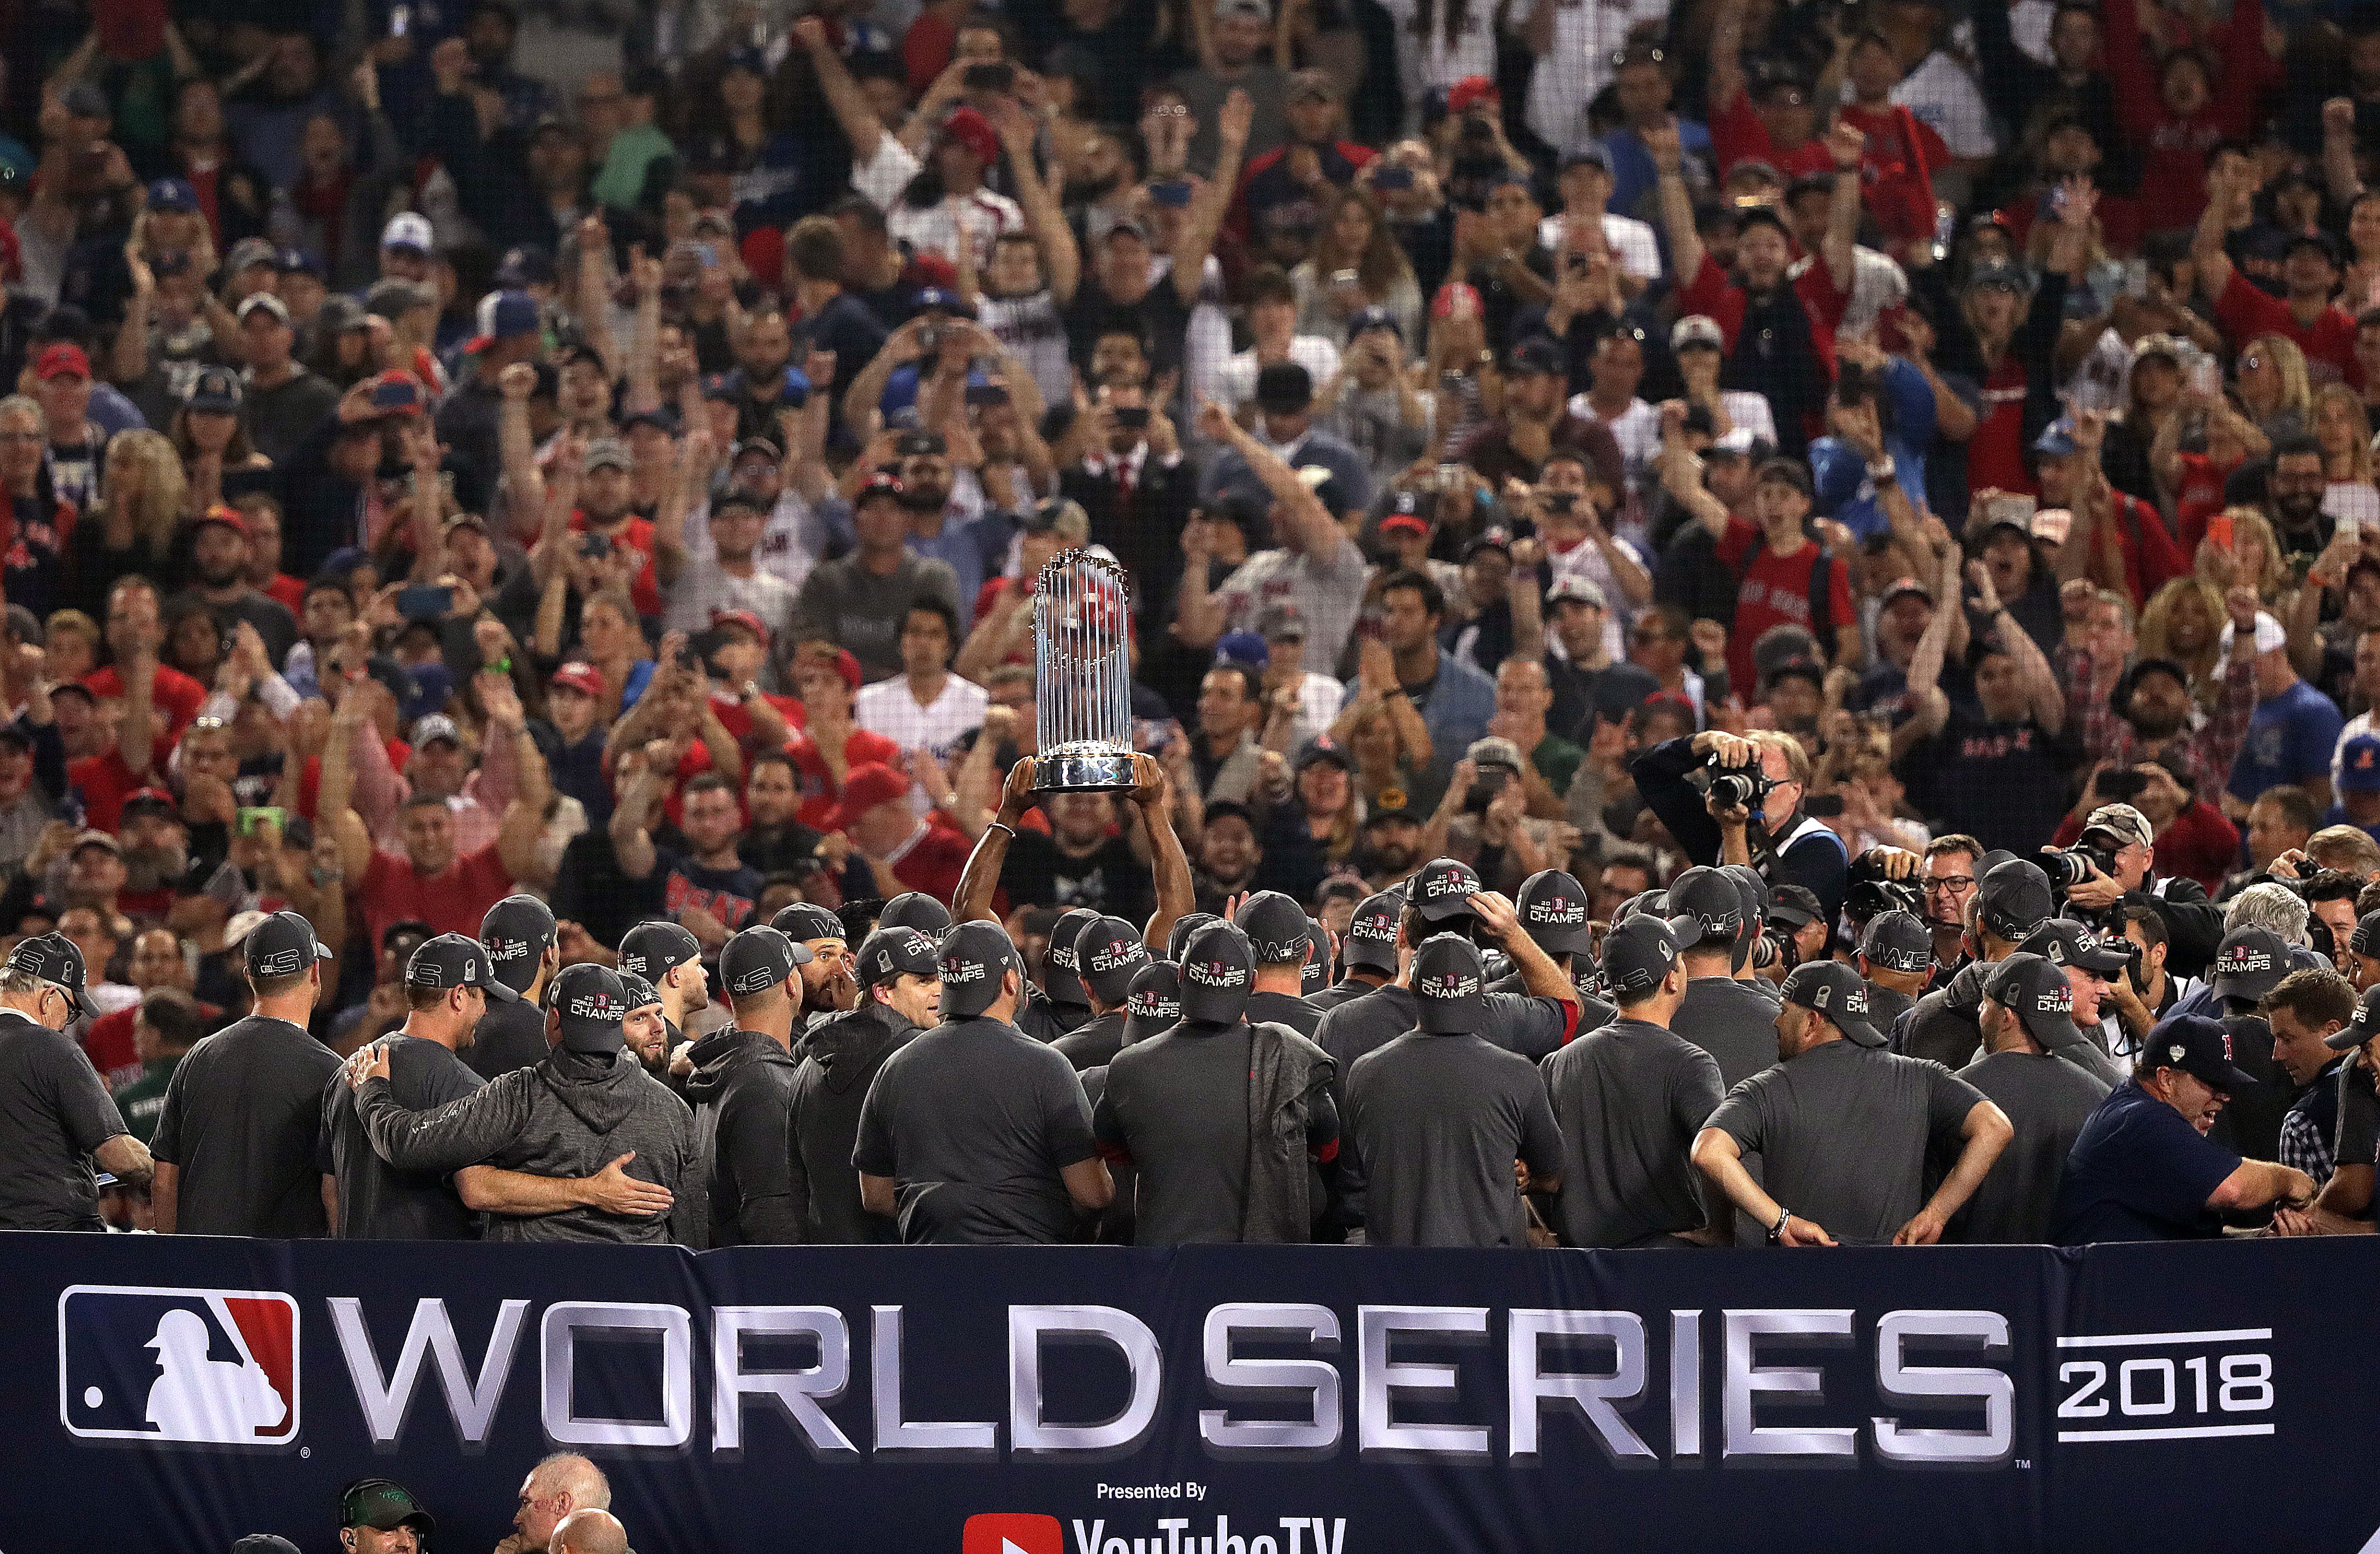 Red Sox win the 2018 World Series - The Boston Globe